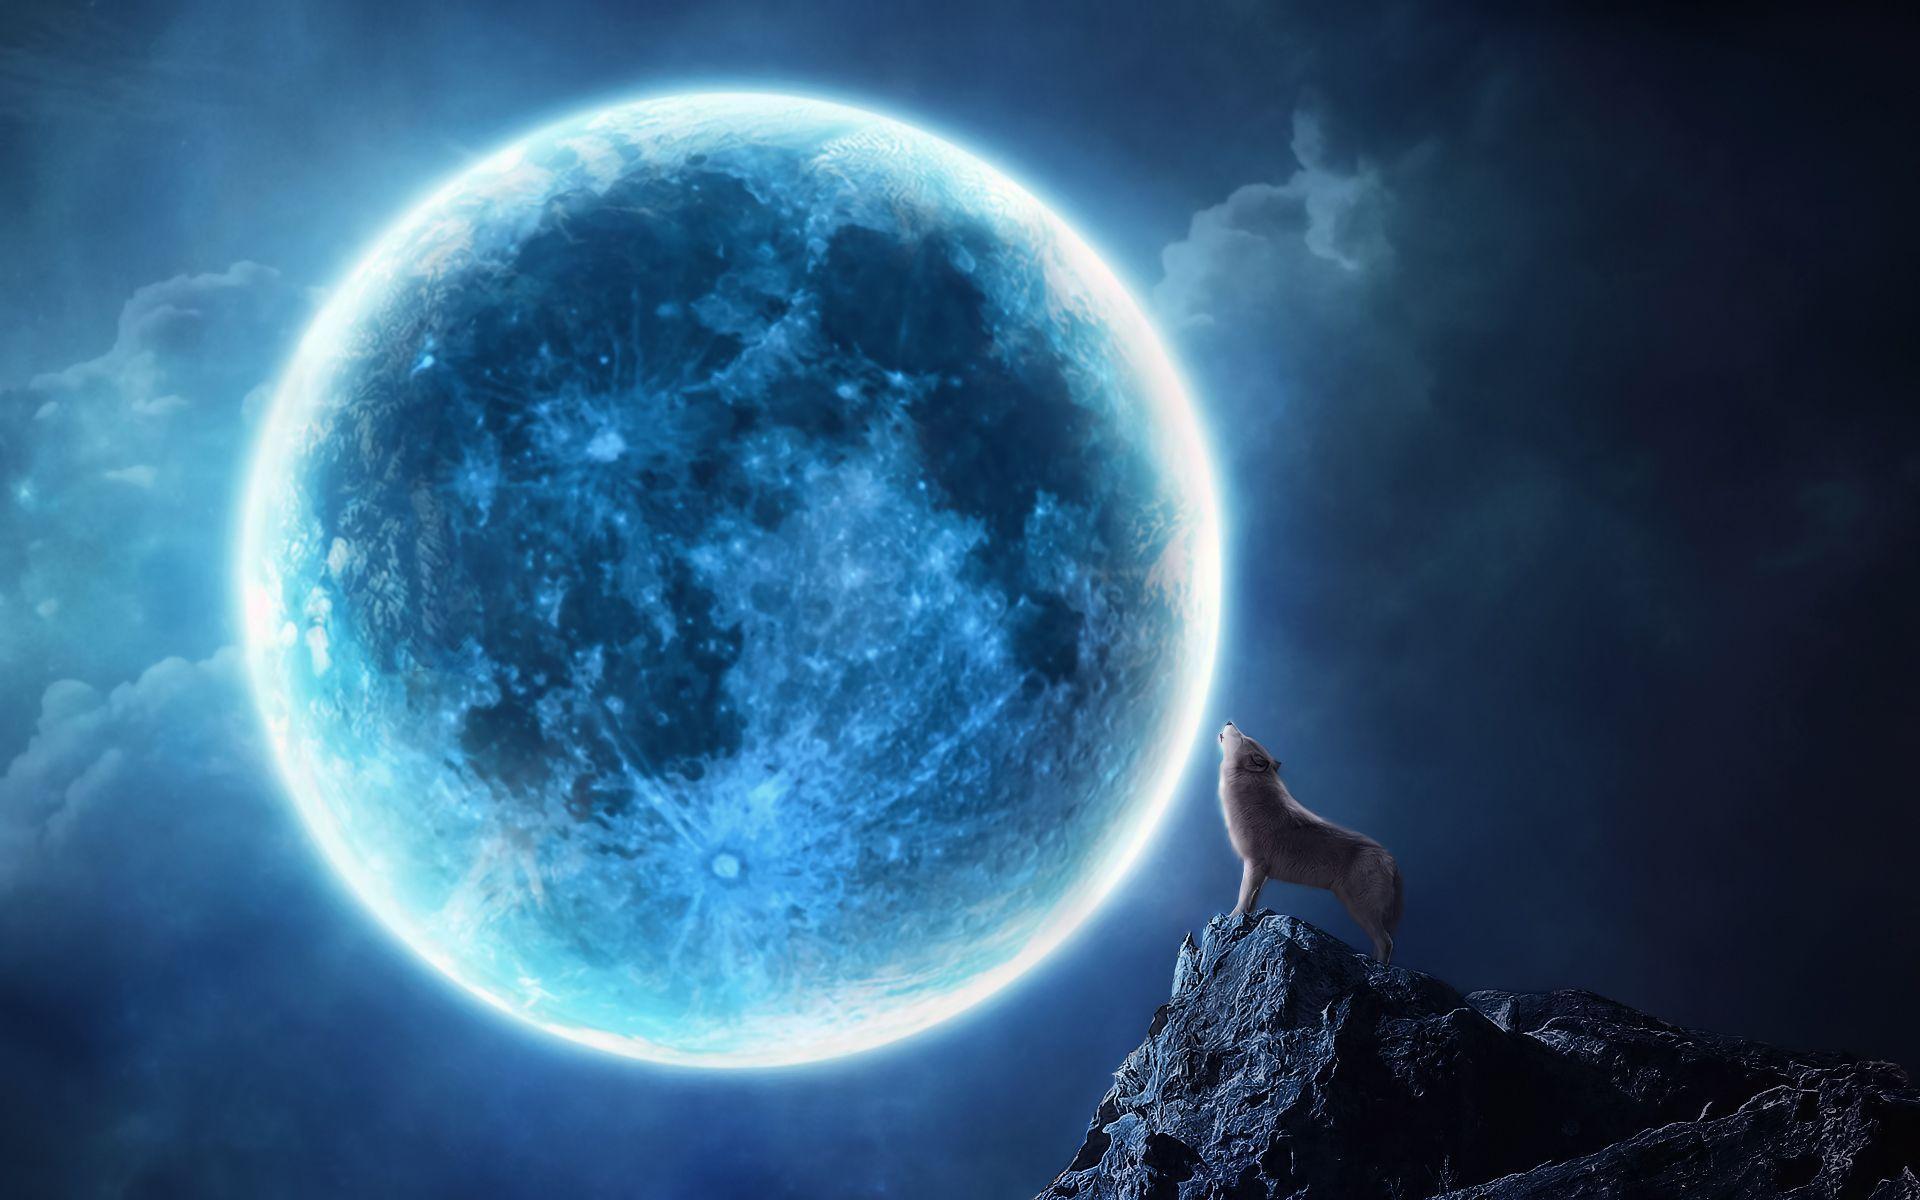 Howling wolf full moon Wallpaper